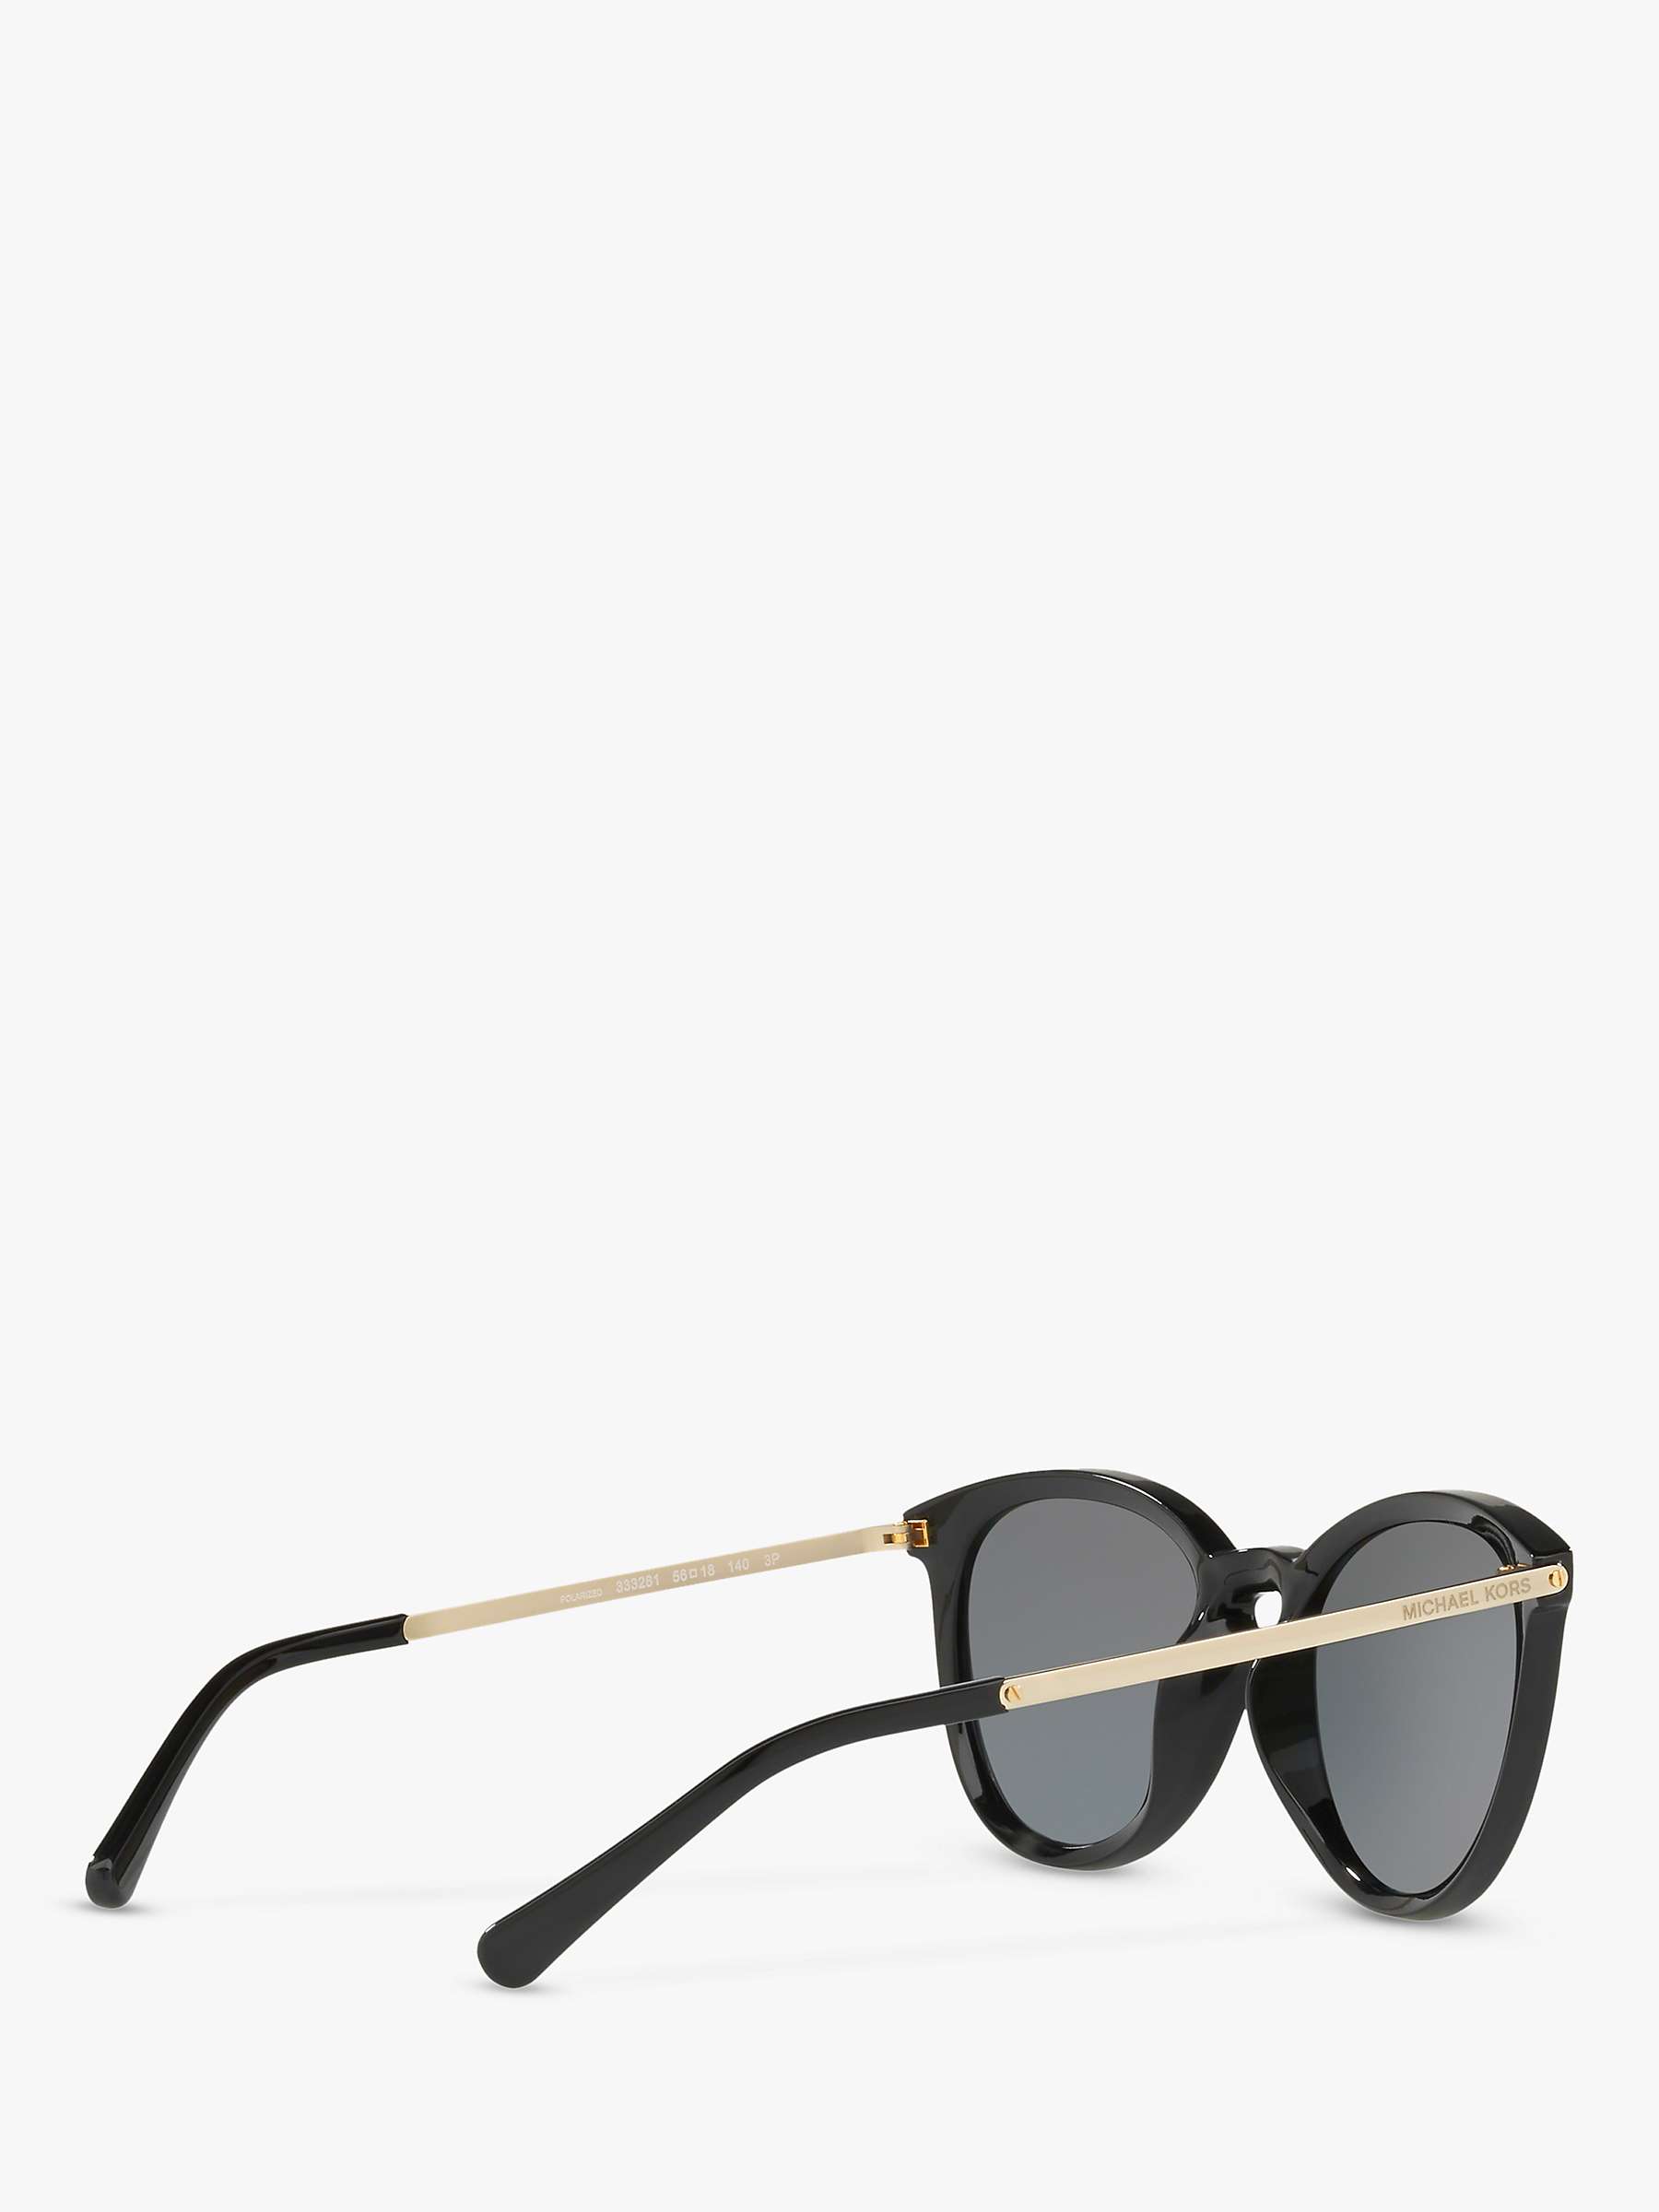 Buy Michael Kors MK2080U Women's Chamonix Polarised Oval Sunglasses, Black/Grey Online at johnlewis.com